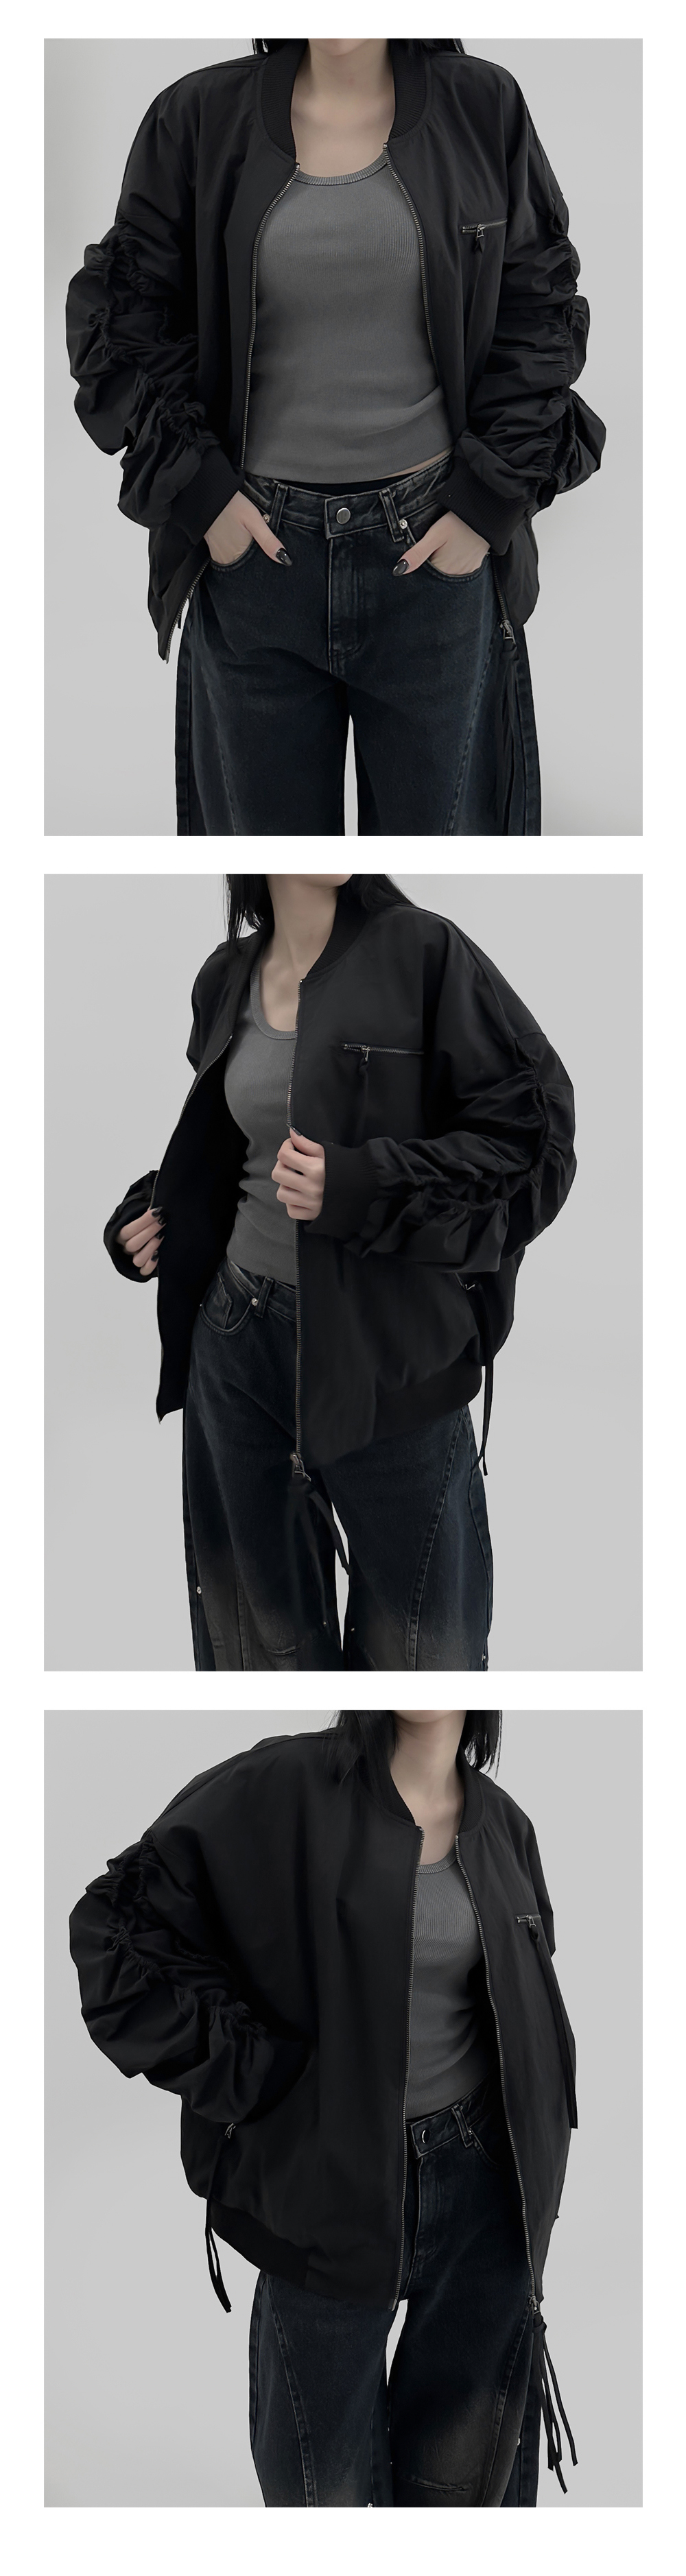 jacket charcoal color image-S1L25